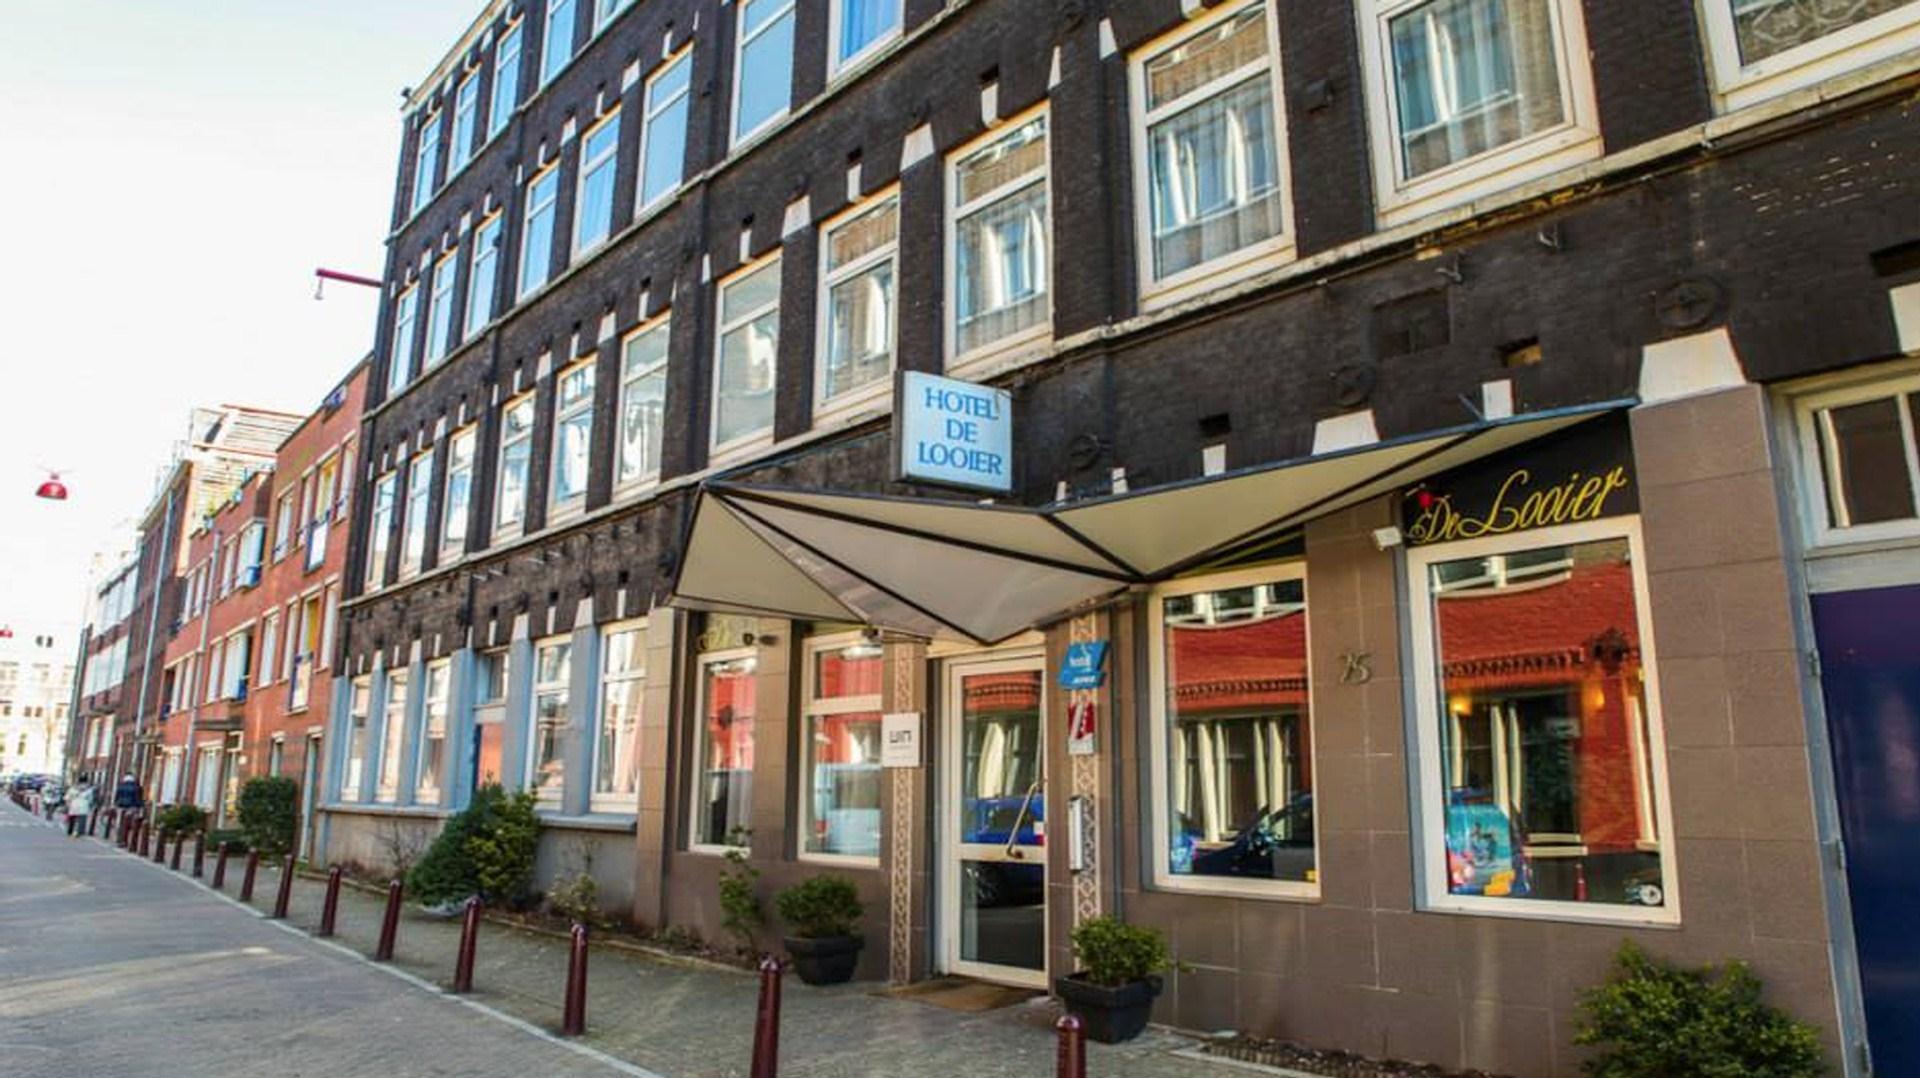 Hotel De Looier in Amsterdam, NL